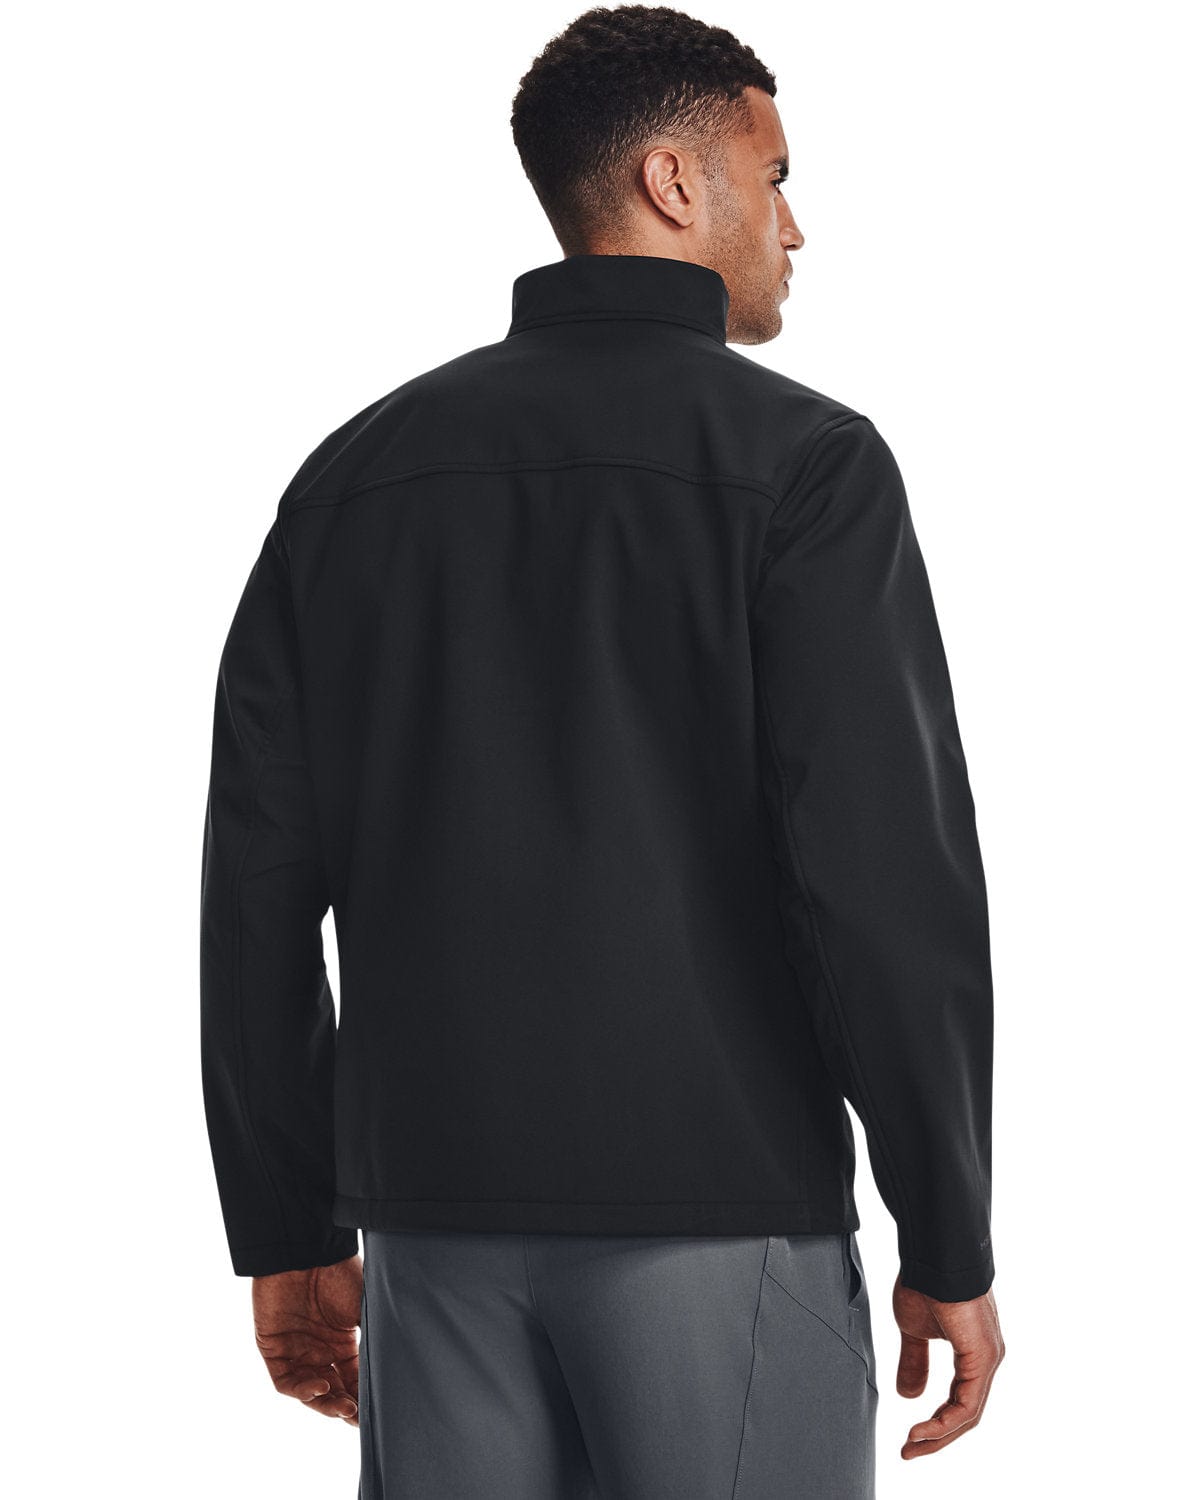 Under Armour - Men's ColdGear® Infrared Shield 2.0 Jacket